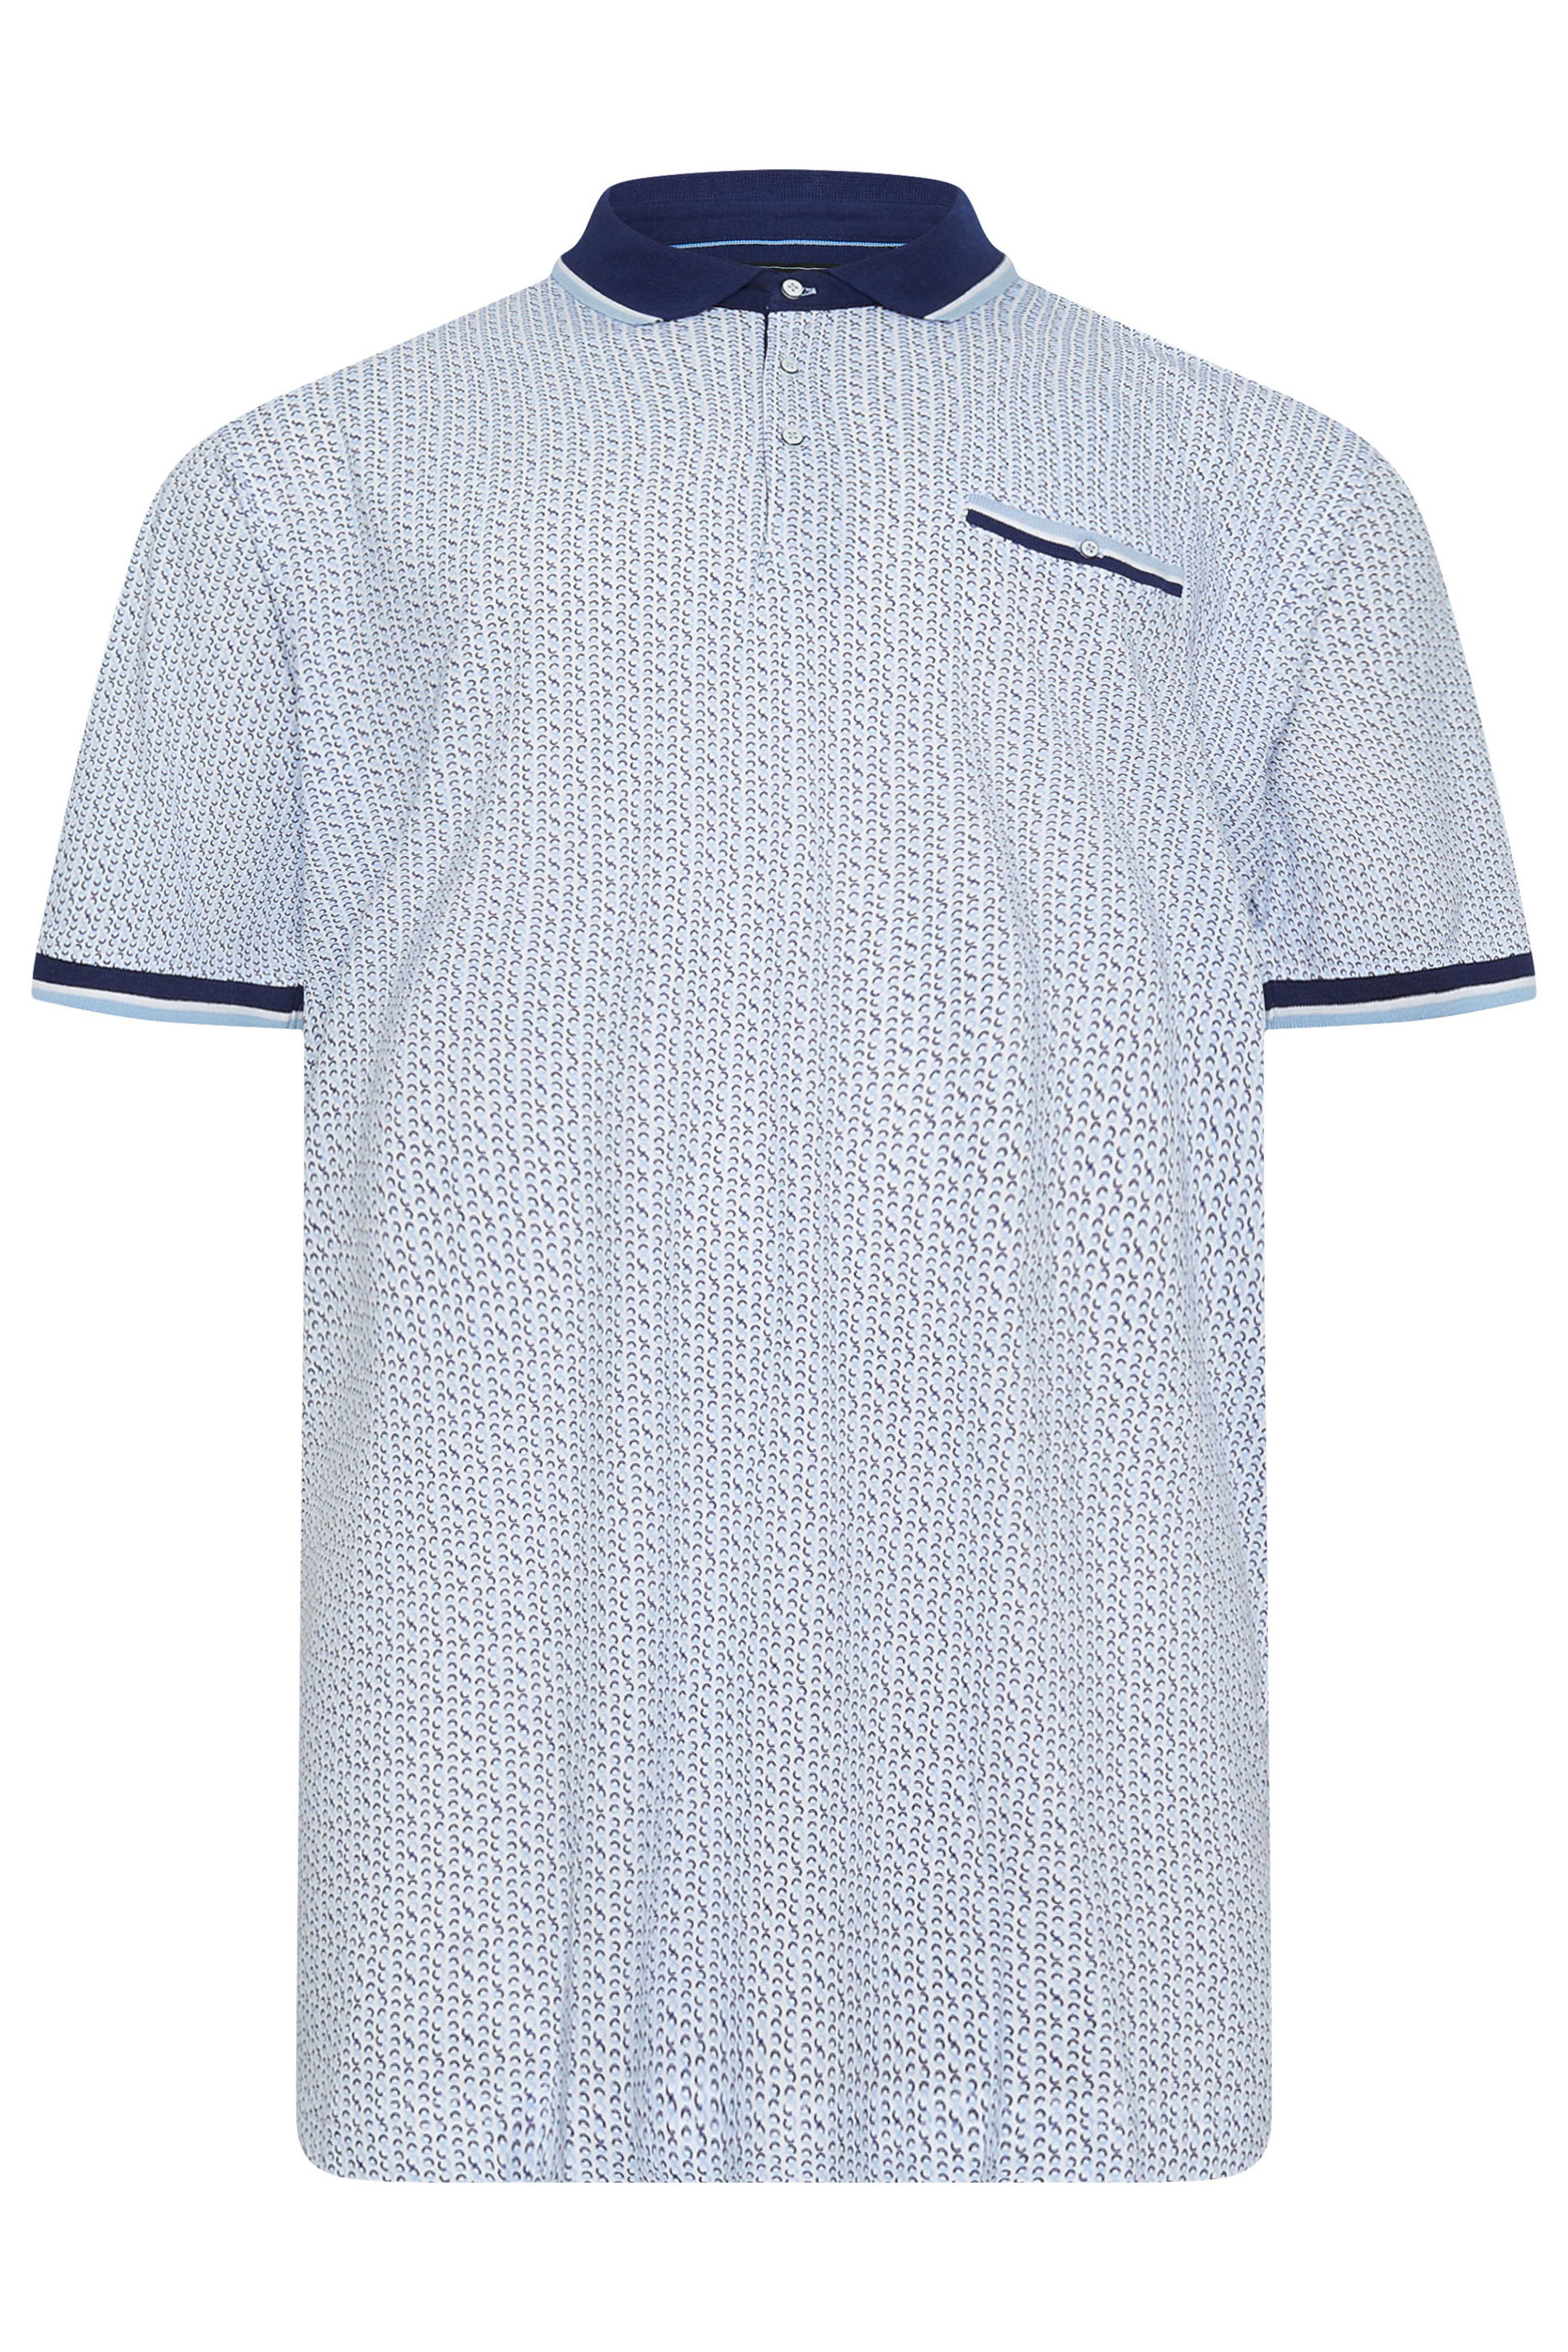 KAM Big & Tall White & Blue Dobby Jersey Polo Shirt | BadRhino 3